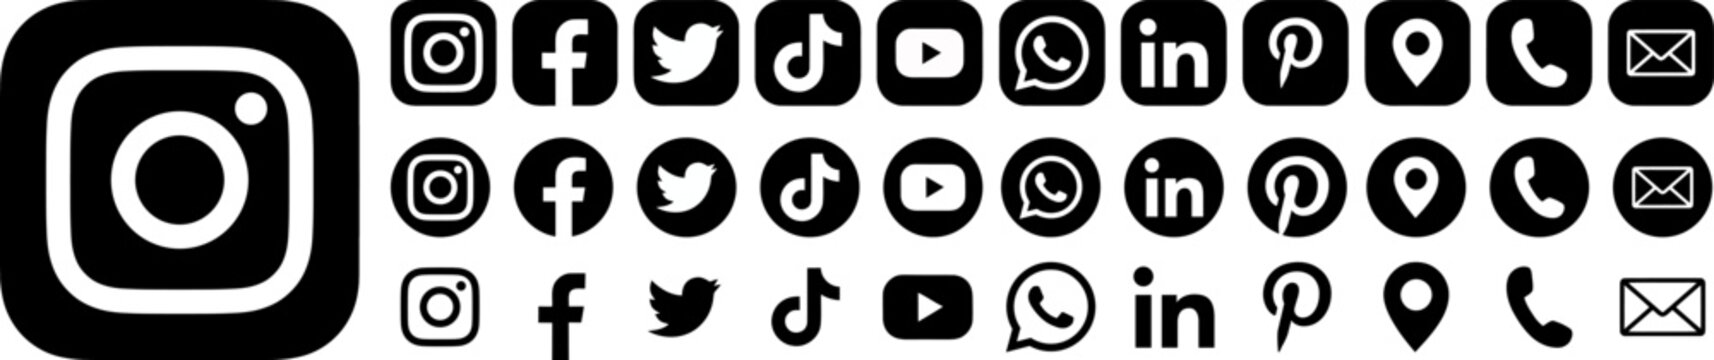 Social media icons. Instagram, Facebook, Twitter, TikTok, YouTube, WhatsApp contact black round, square network logo set. Vector editorial illustration